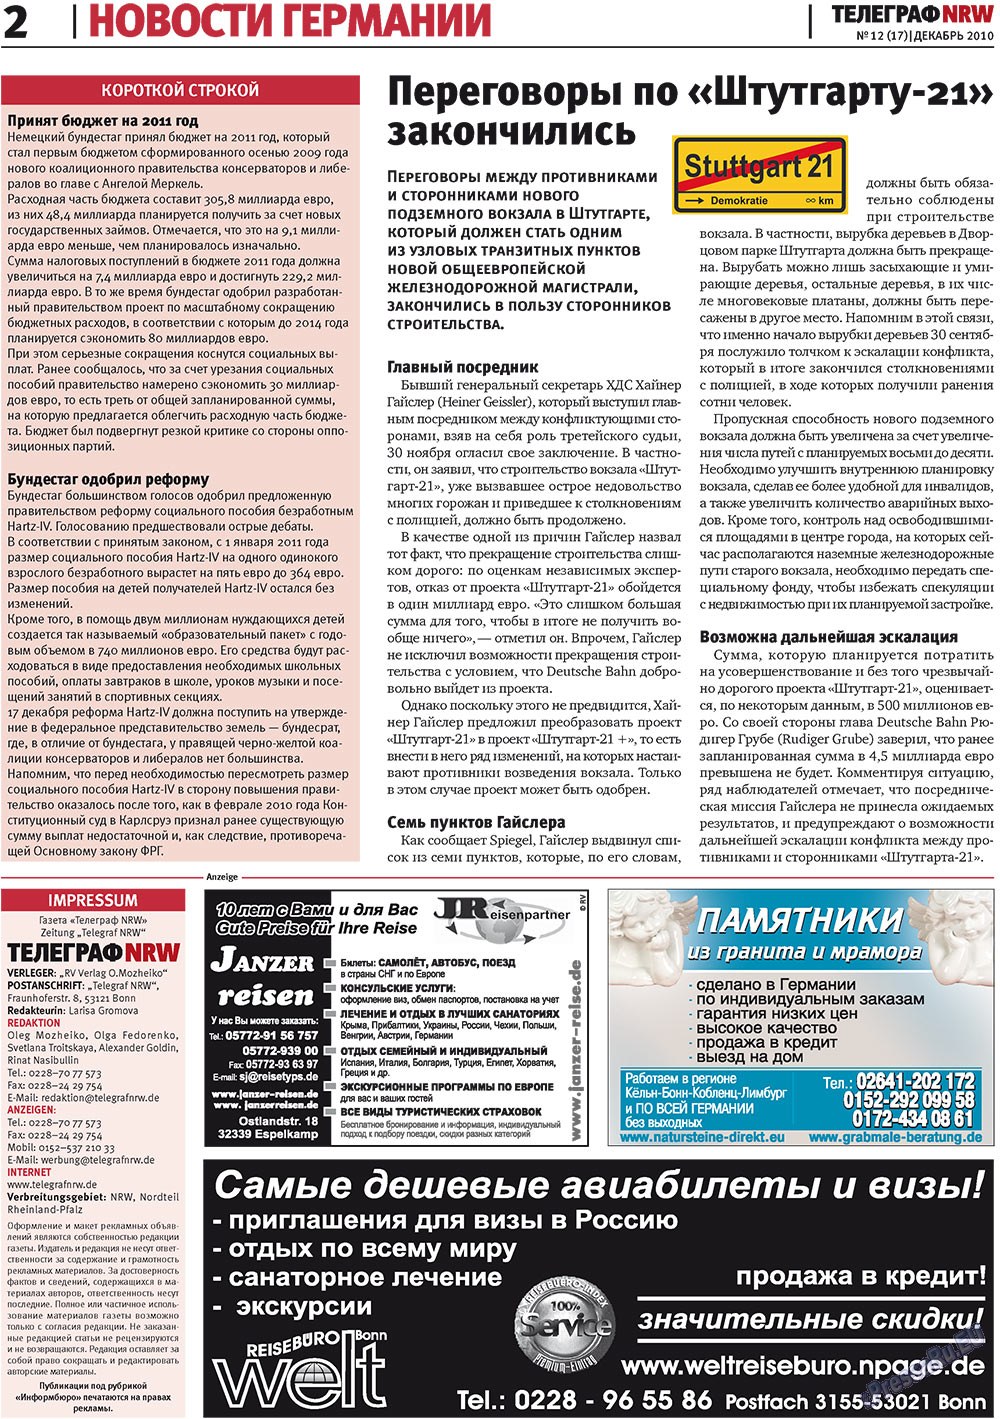 Телеграф NRW, газета. 2010 №12 стр.2